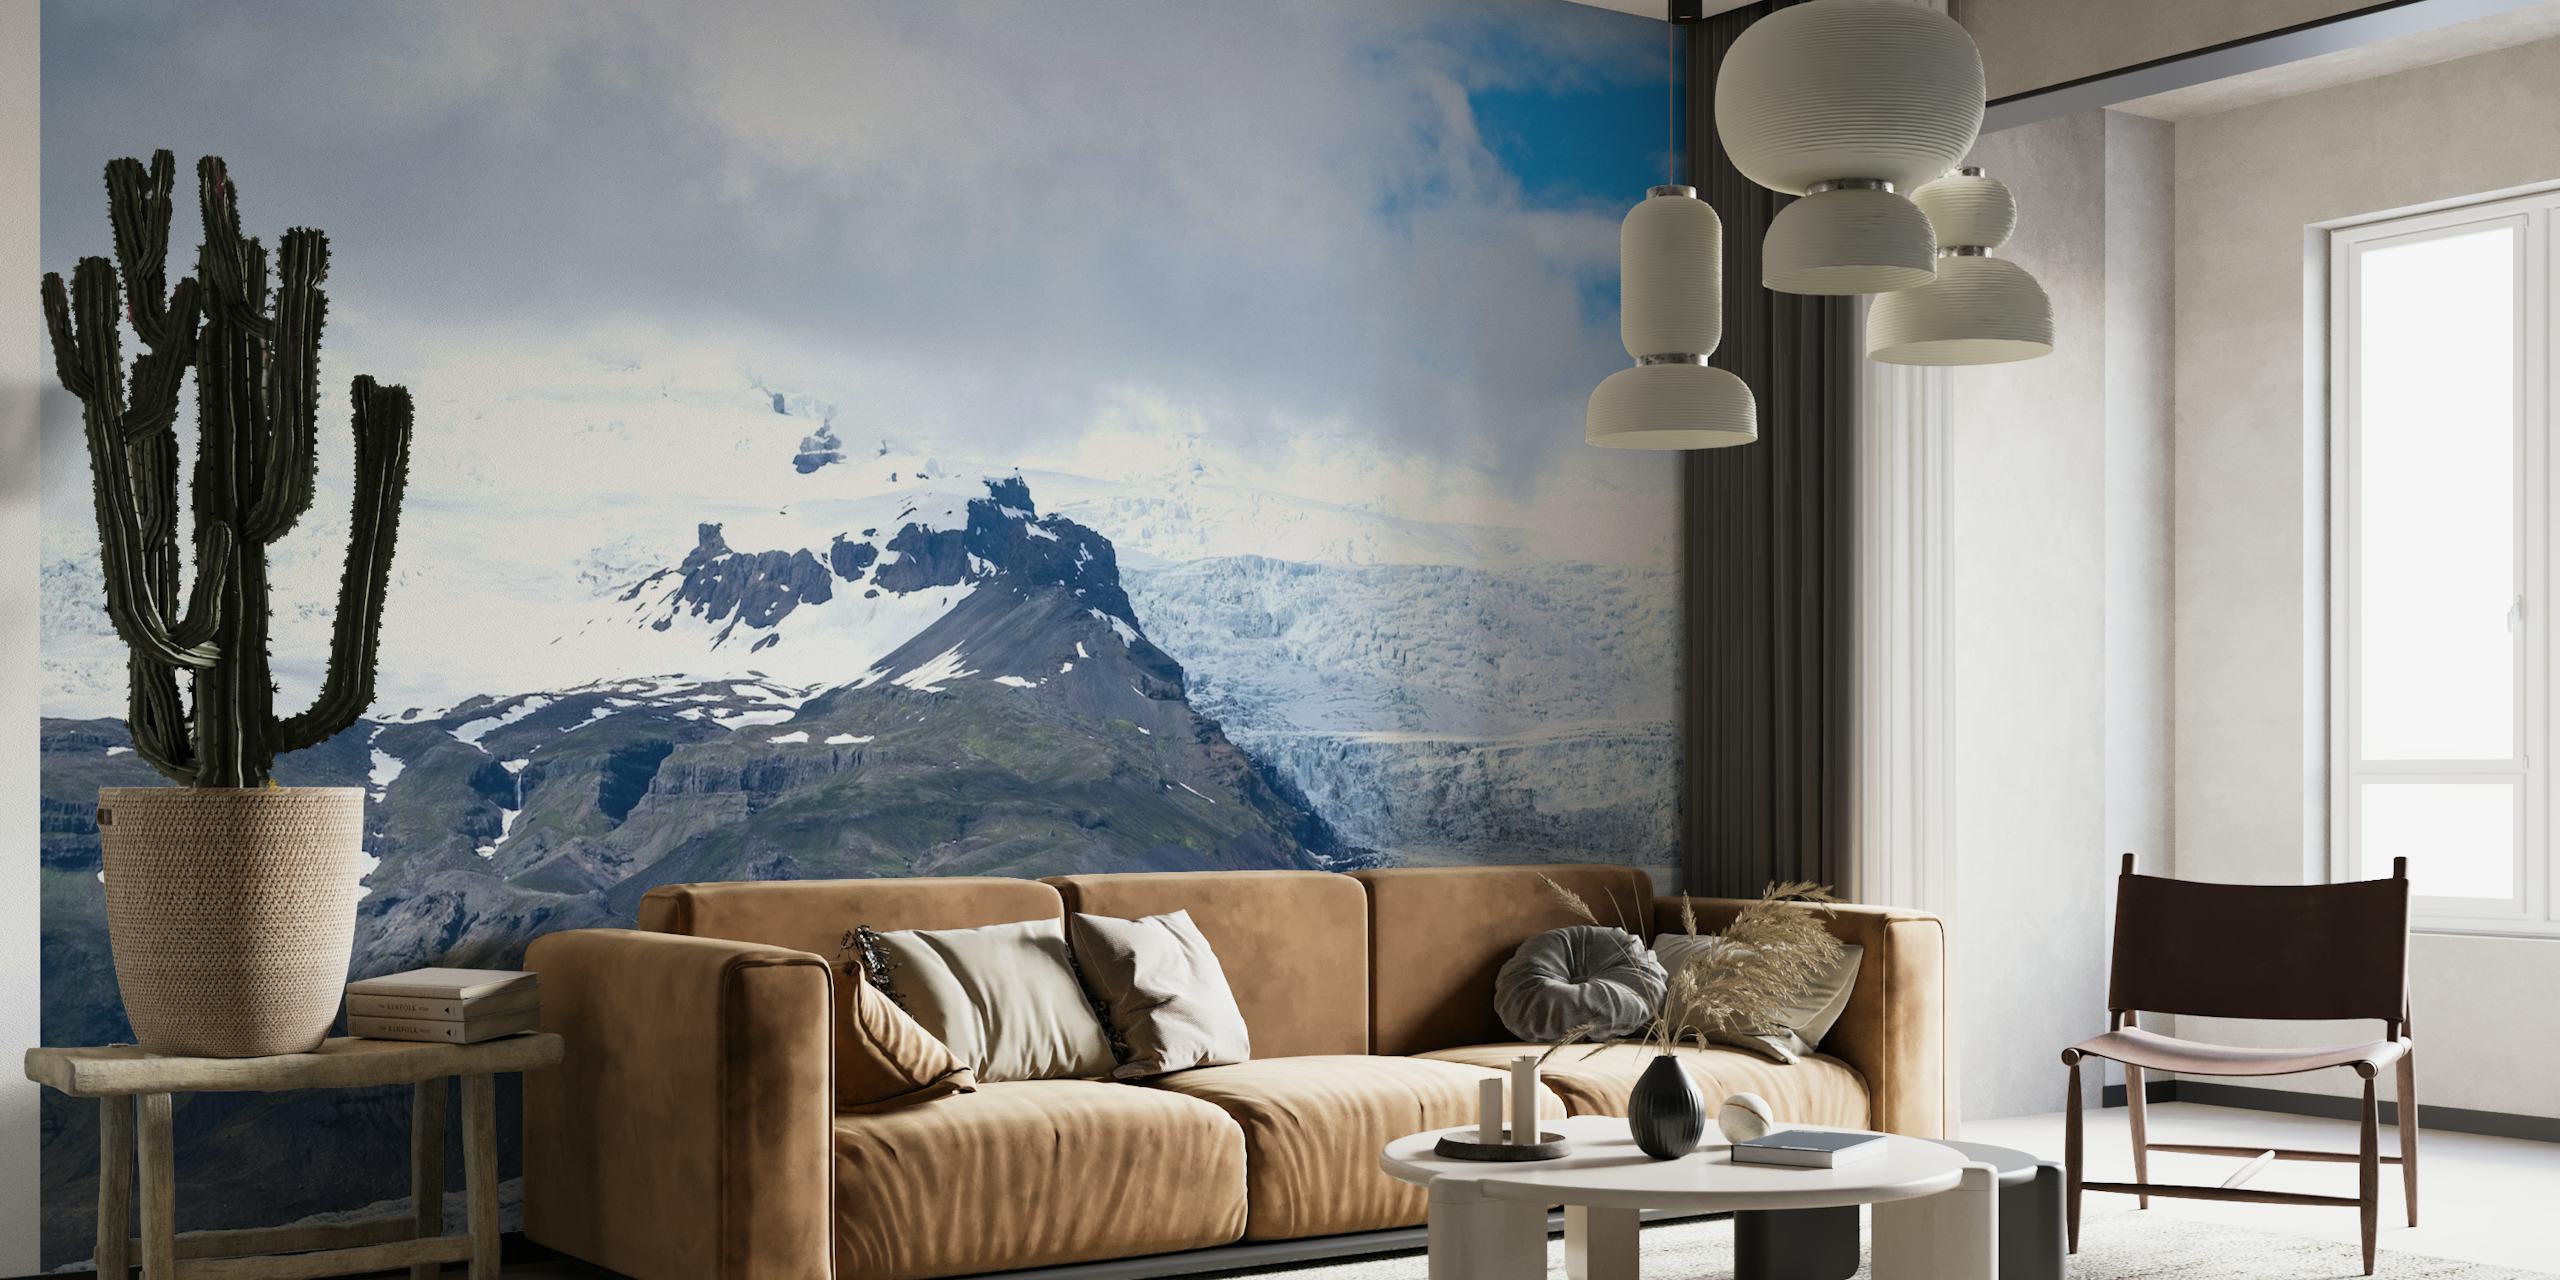 Breiðamerkurjökull glacier wall mural with blue icy tones and mountain peaks